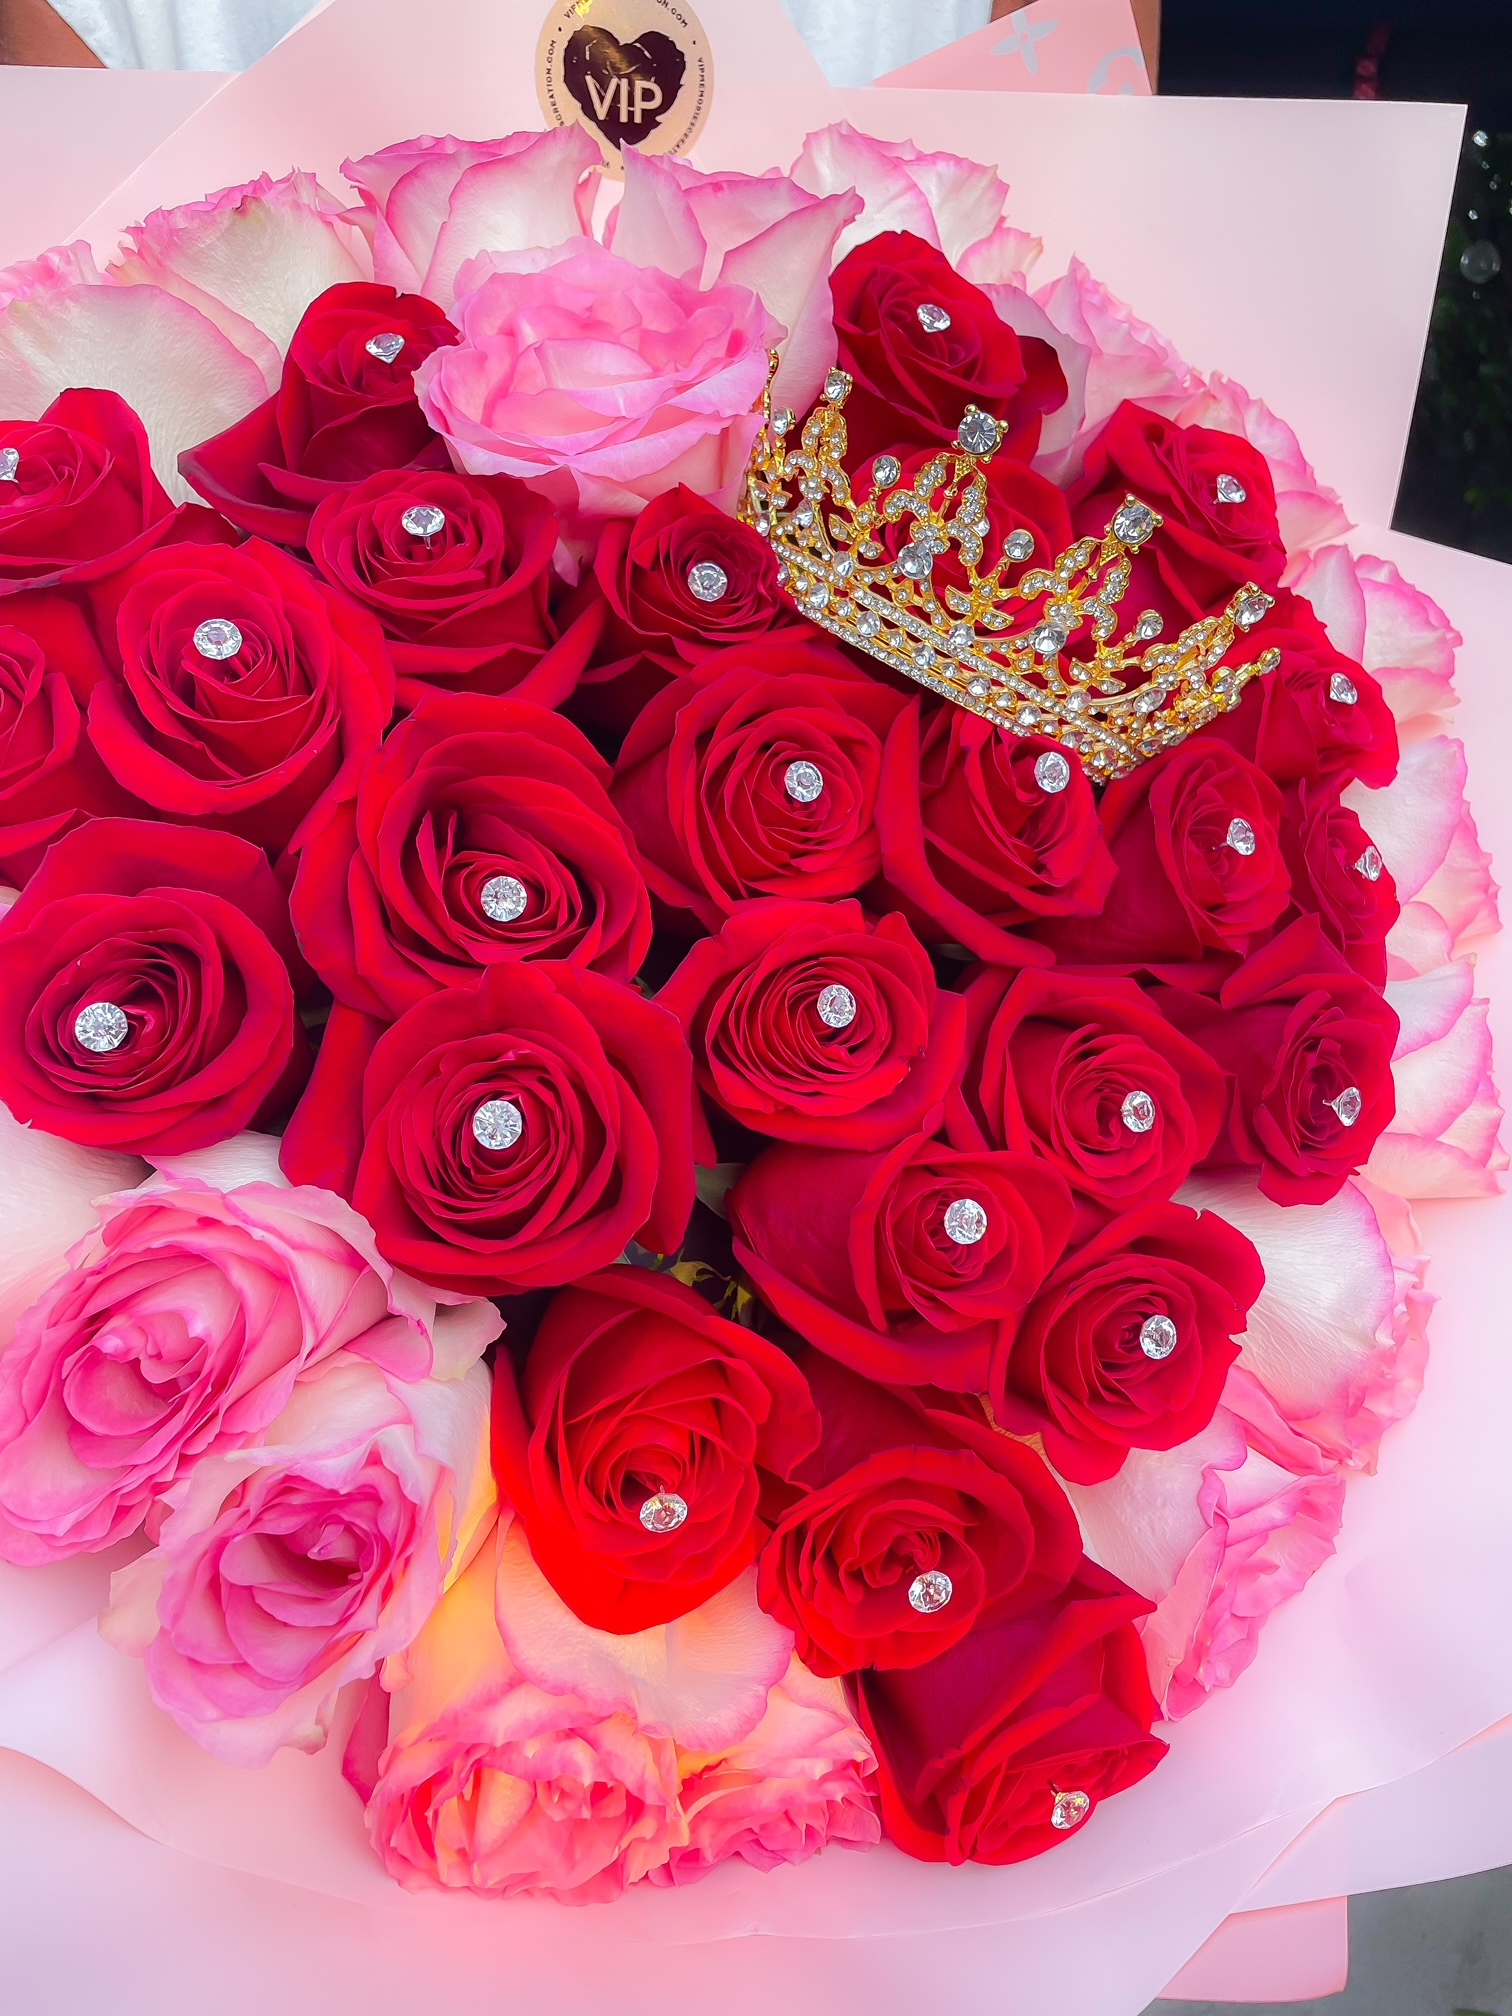 Ramo Buchon 50 Roses Heart and Royal Crown – VIP Memories Creation